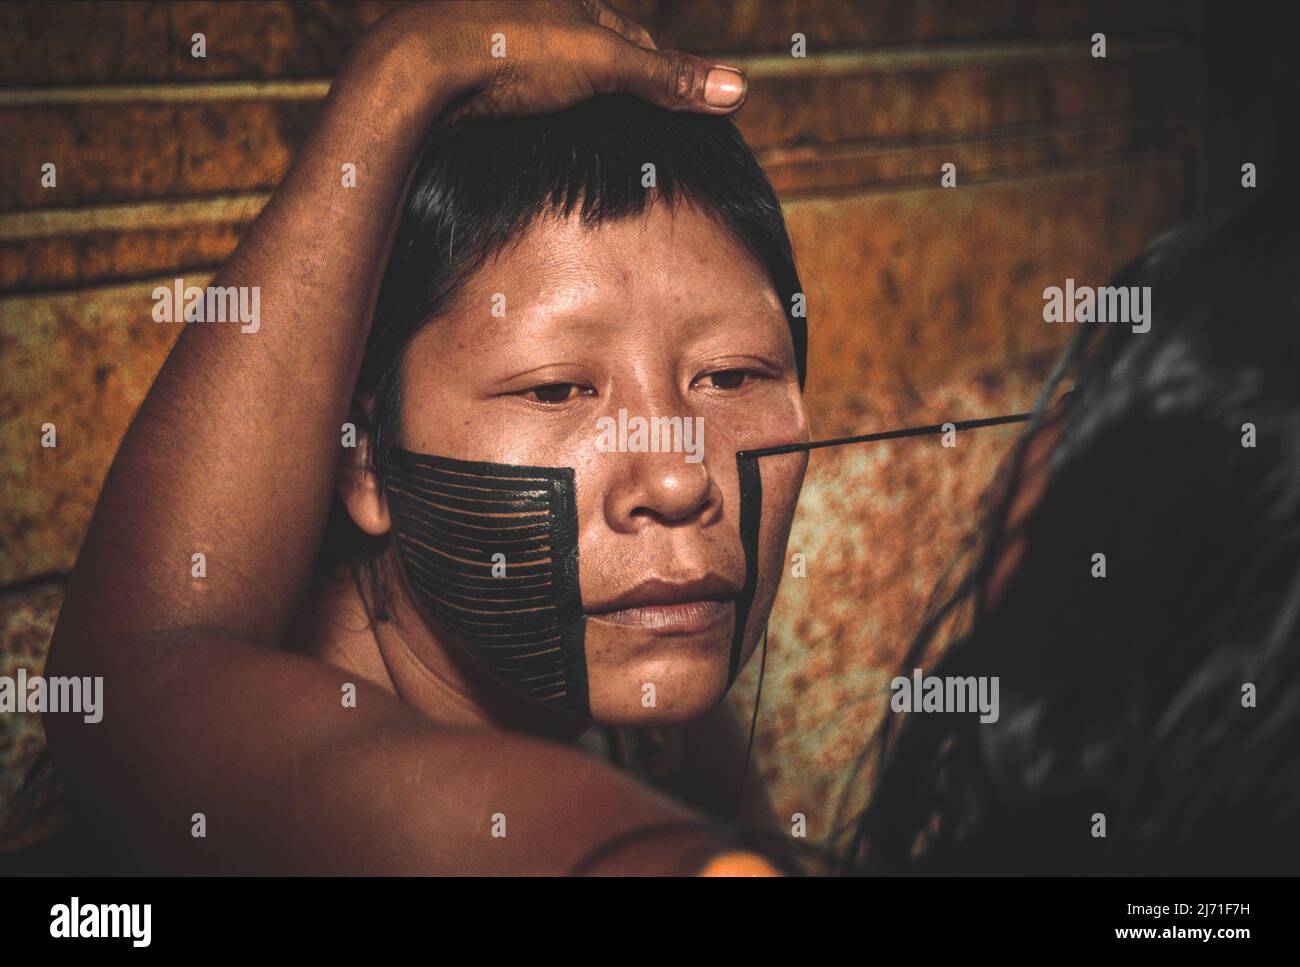 Indigenous woman from the Asurini tribe, having her face painted with tribal art. Índia Amazônica Brasileira. Xingu River, Baixo Amazonas, Brazil. Stock Photo